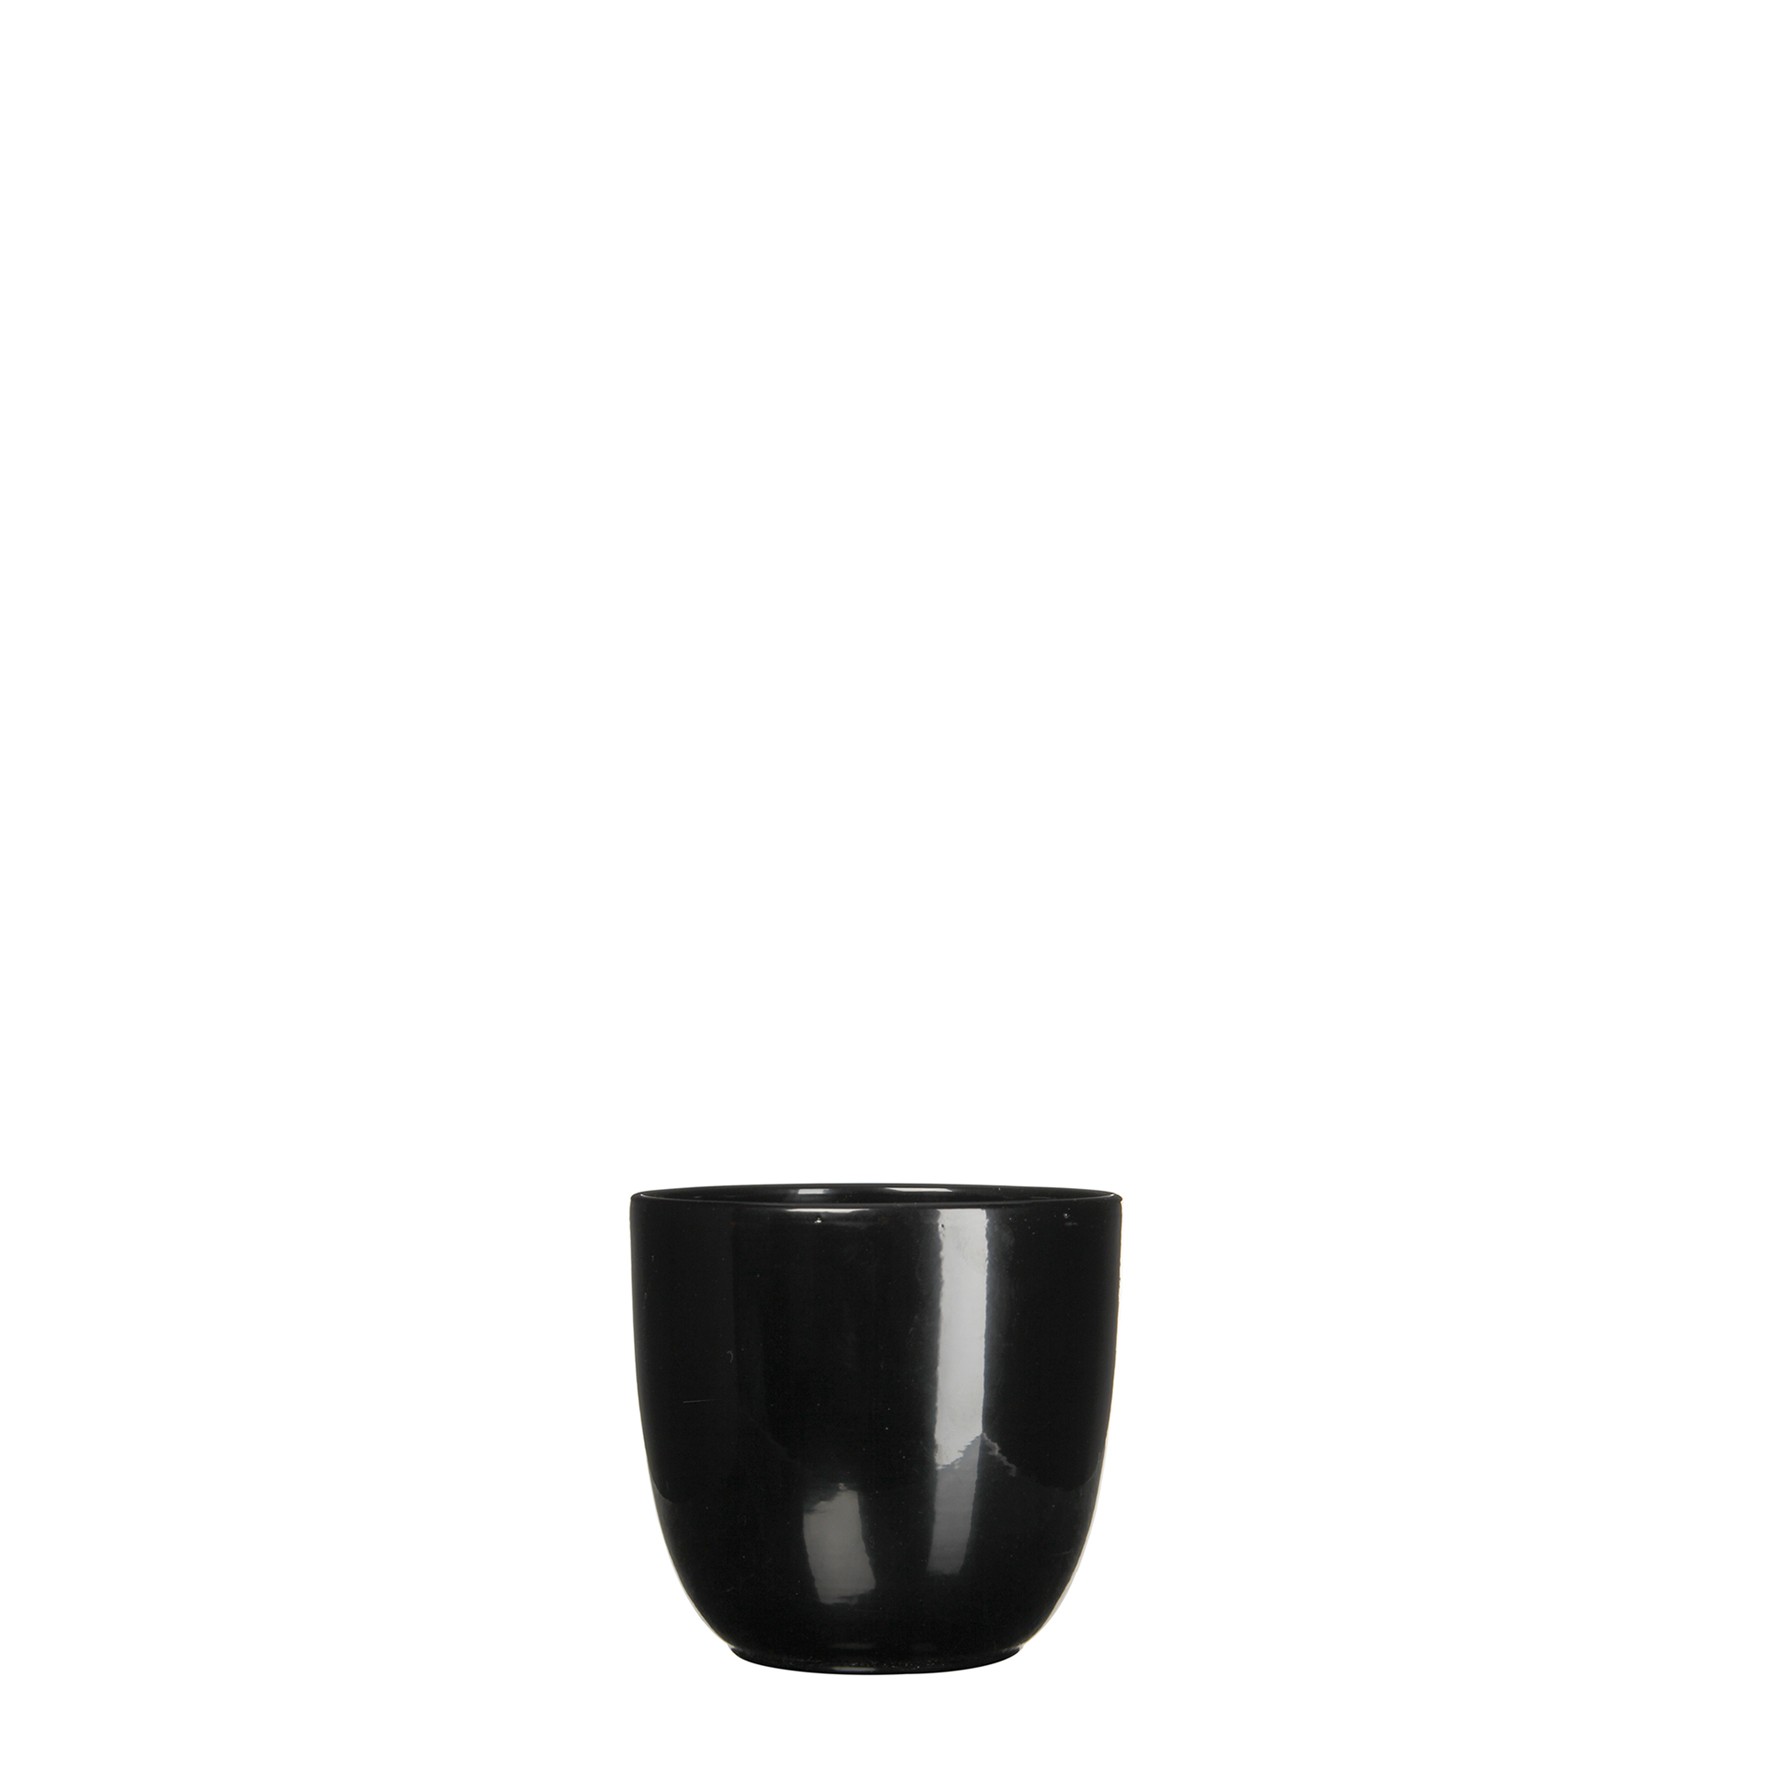 Bloempot Pot rond es/7 tusca 7.5 x 8.5 cm zwart Mica